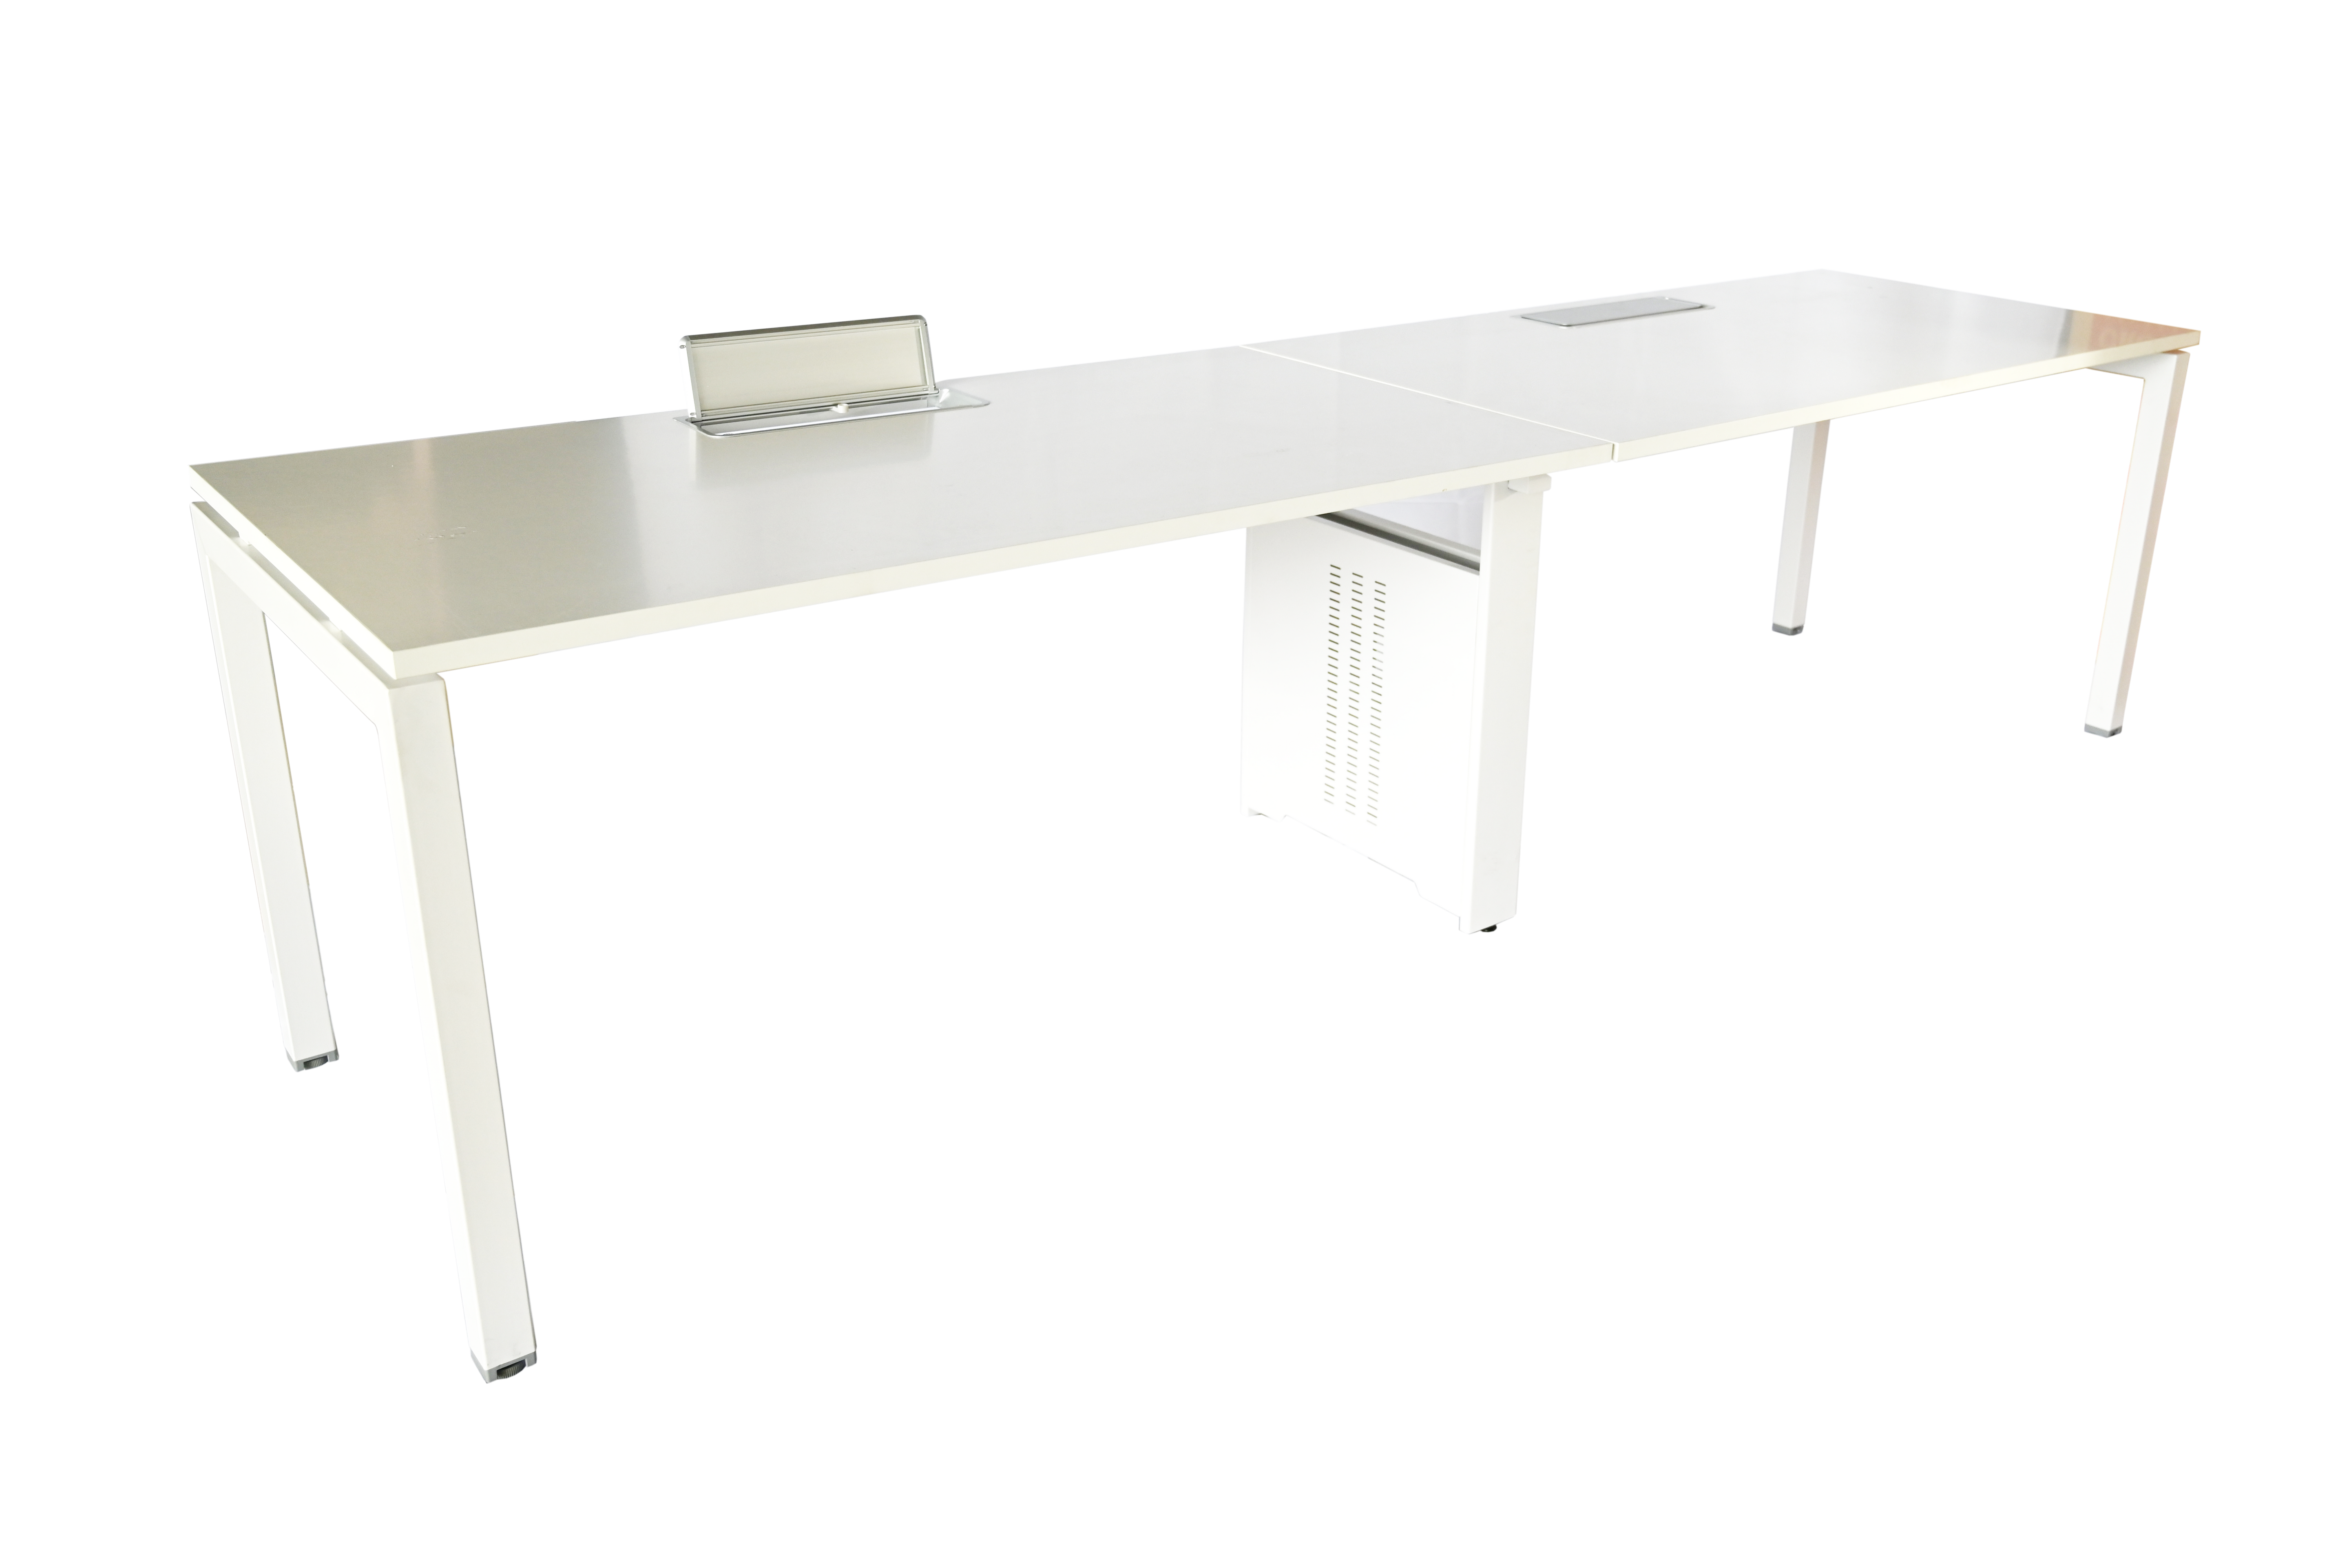 Desks & Tables